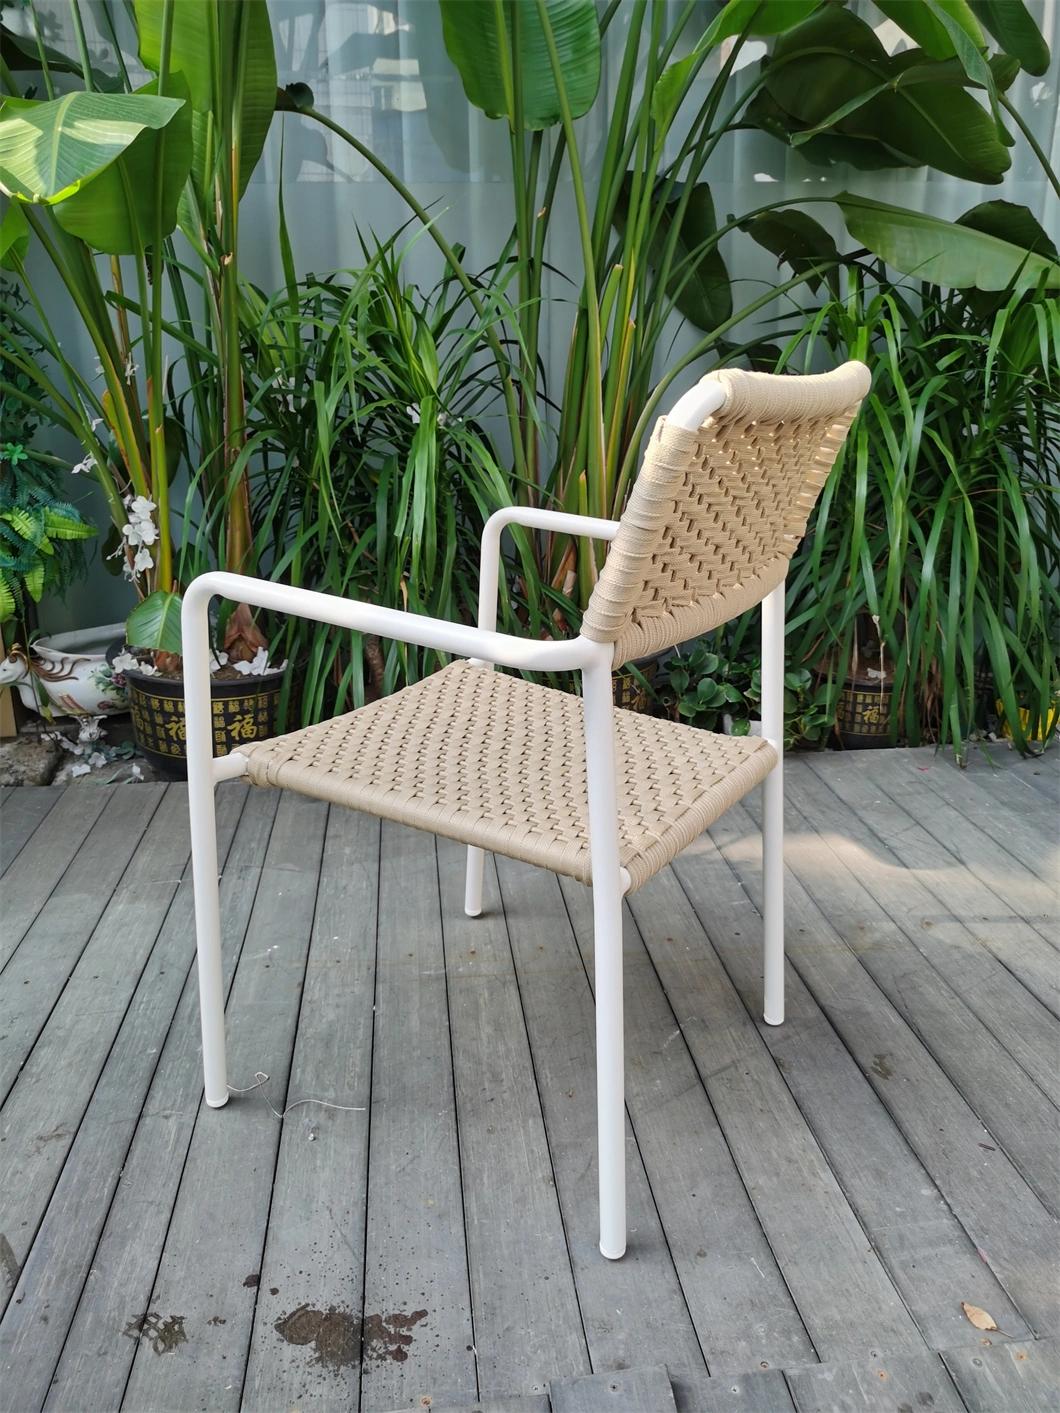 Outdoor New Style Wooden Garden Patio Outdoor Rattan Furniture Chair